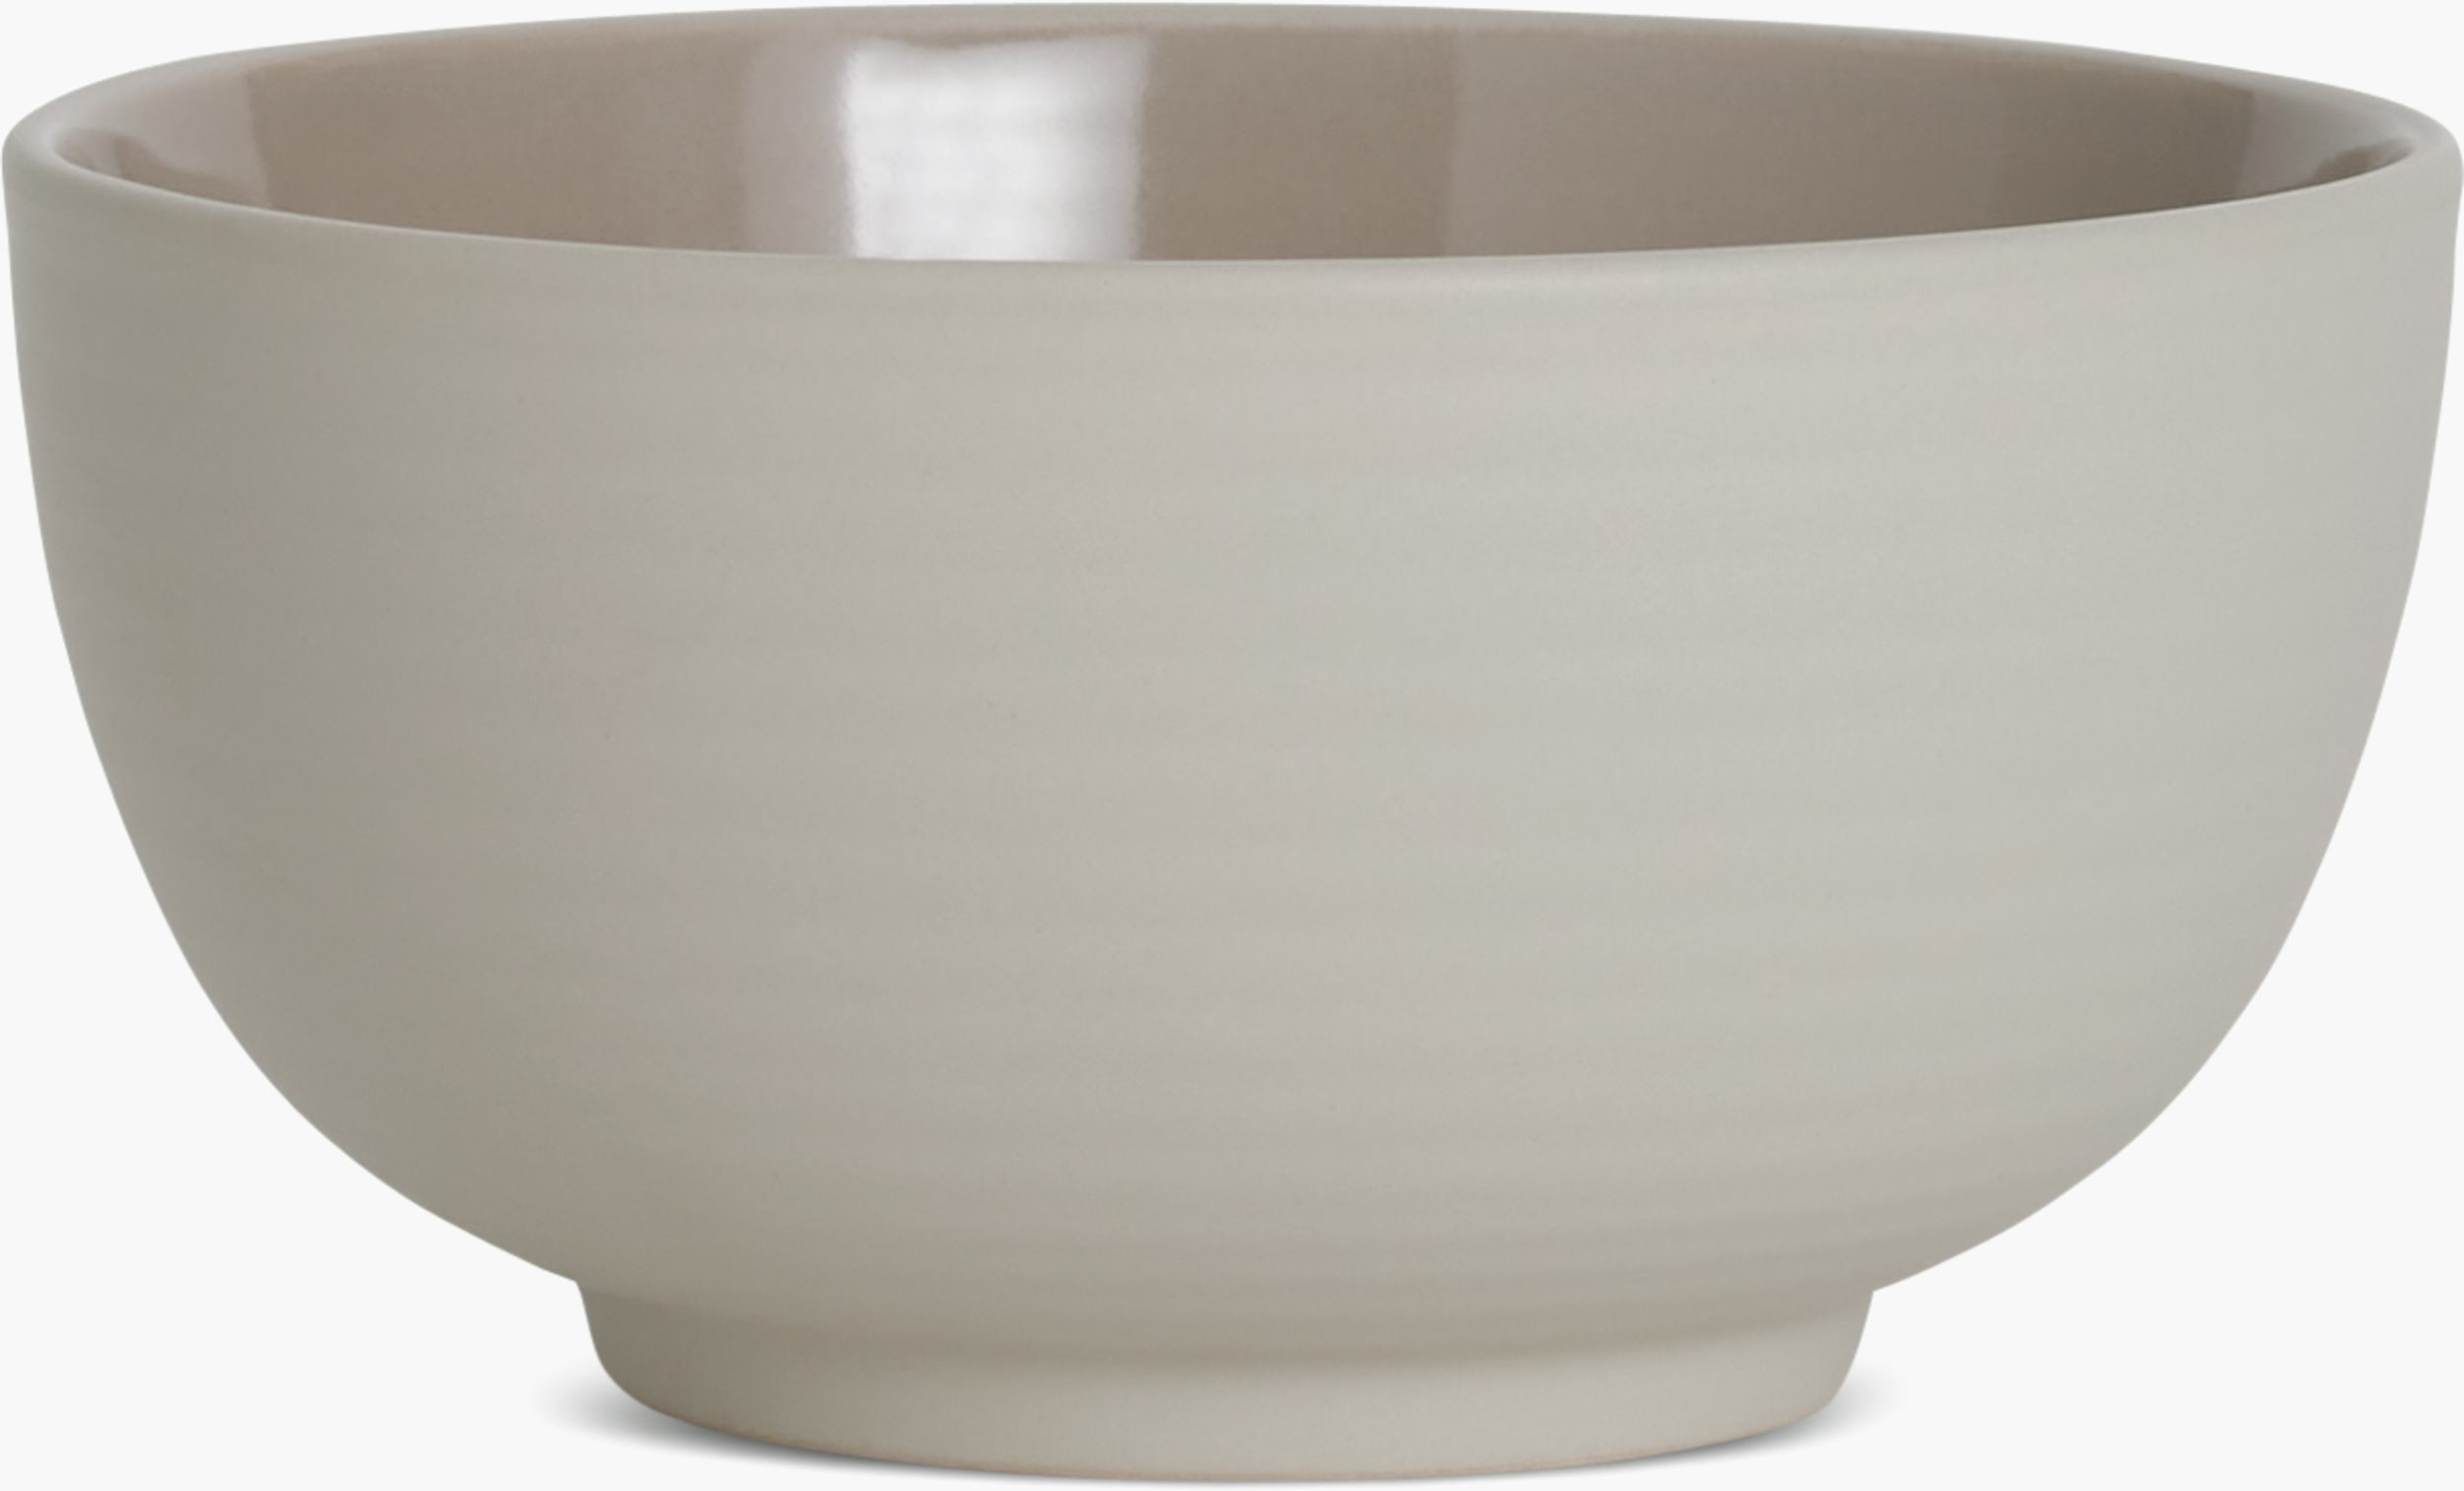 Hawkins New York Essential Mixing Bowls, Set of 3 - Light Grey